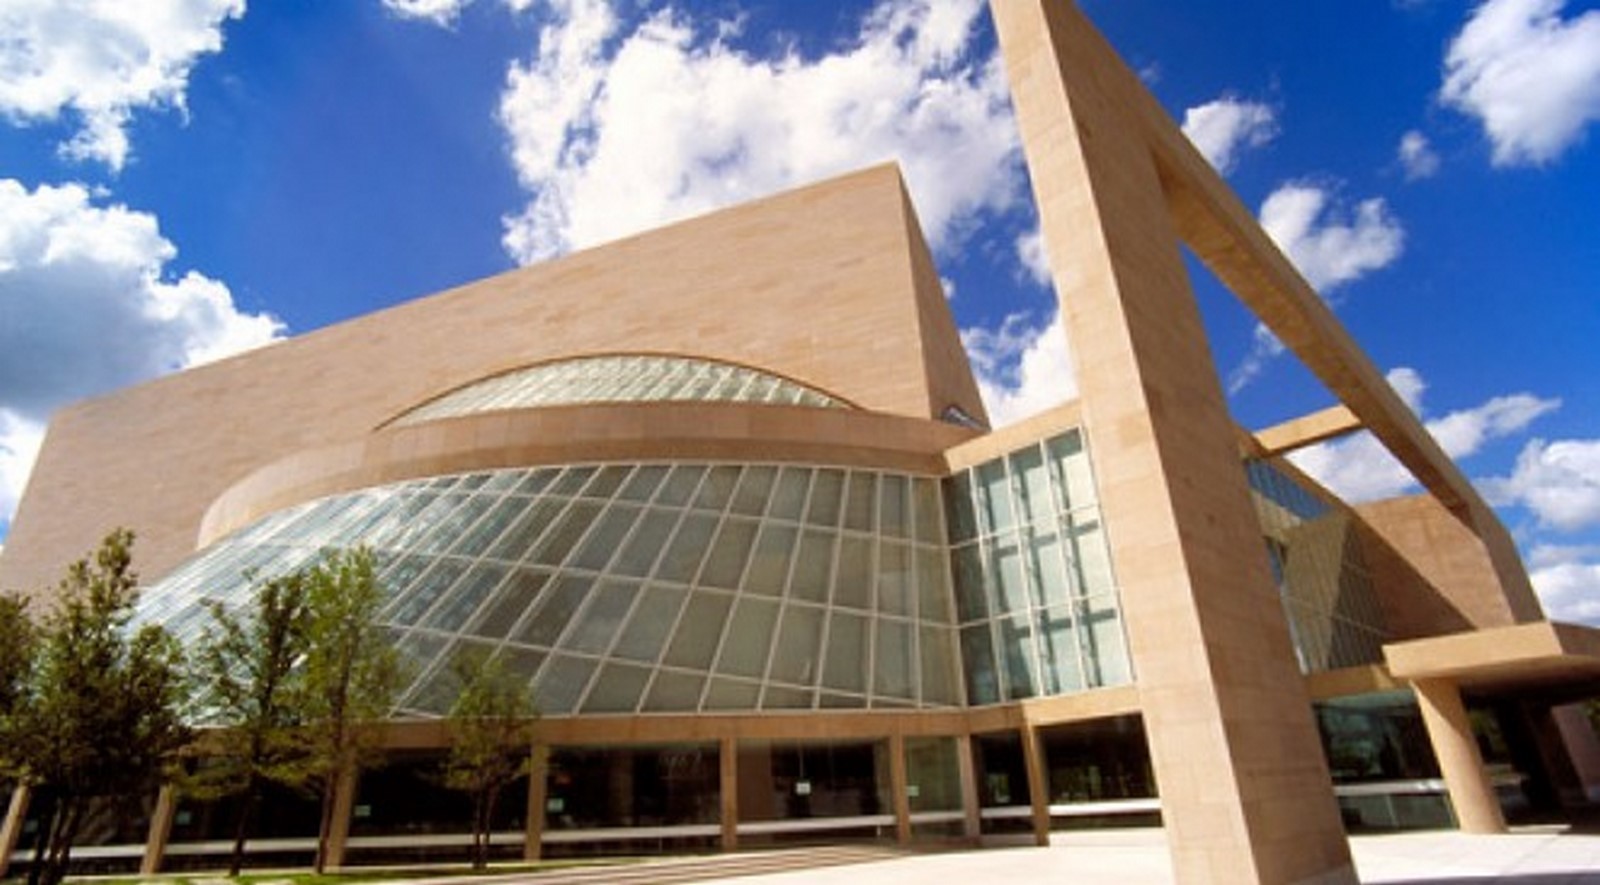 Morton H. Meyerson Symphony Center, Designed by: Architect I.M. Pei - Sheet1